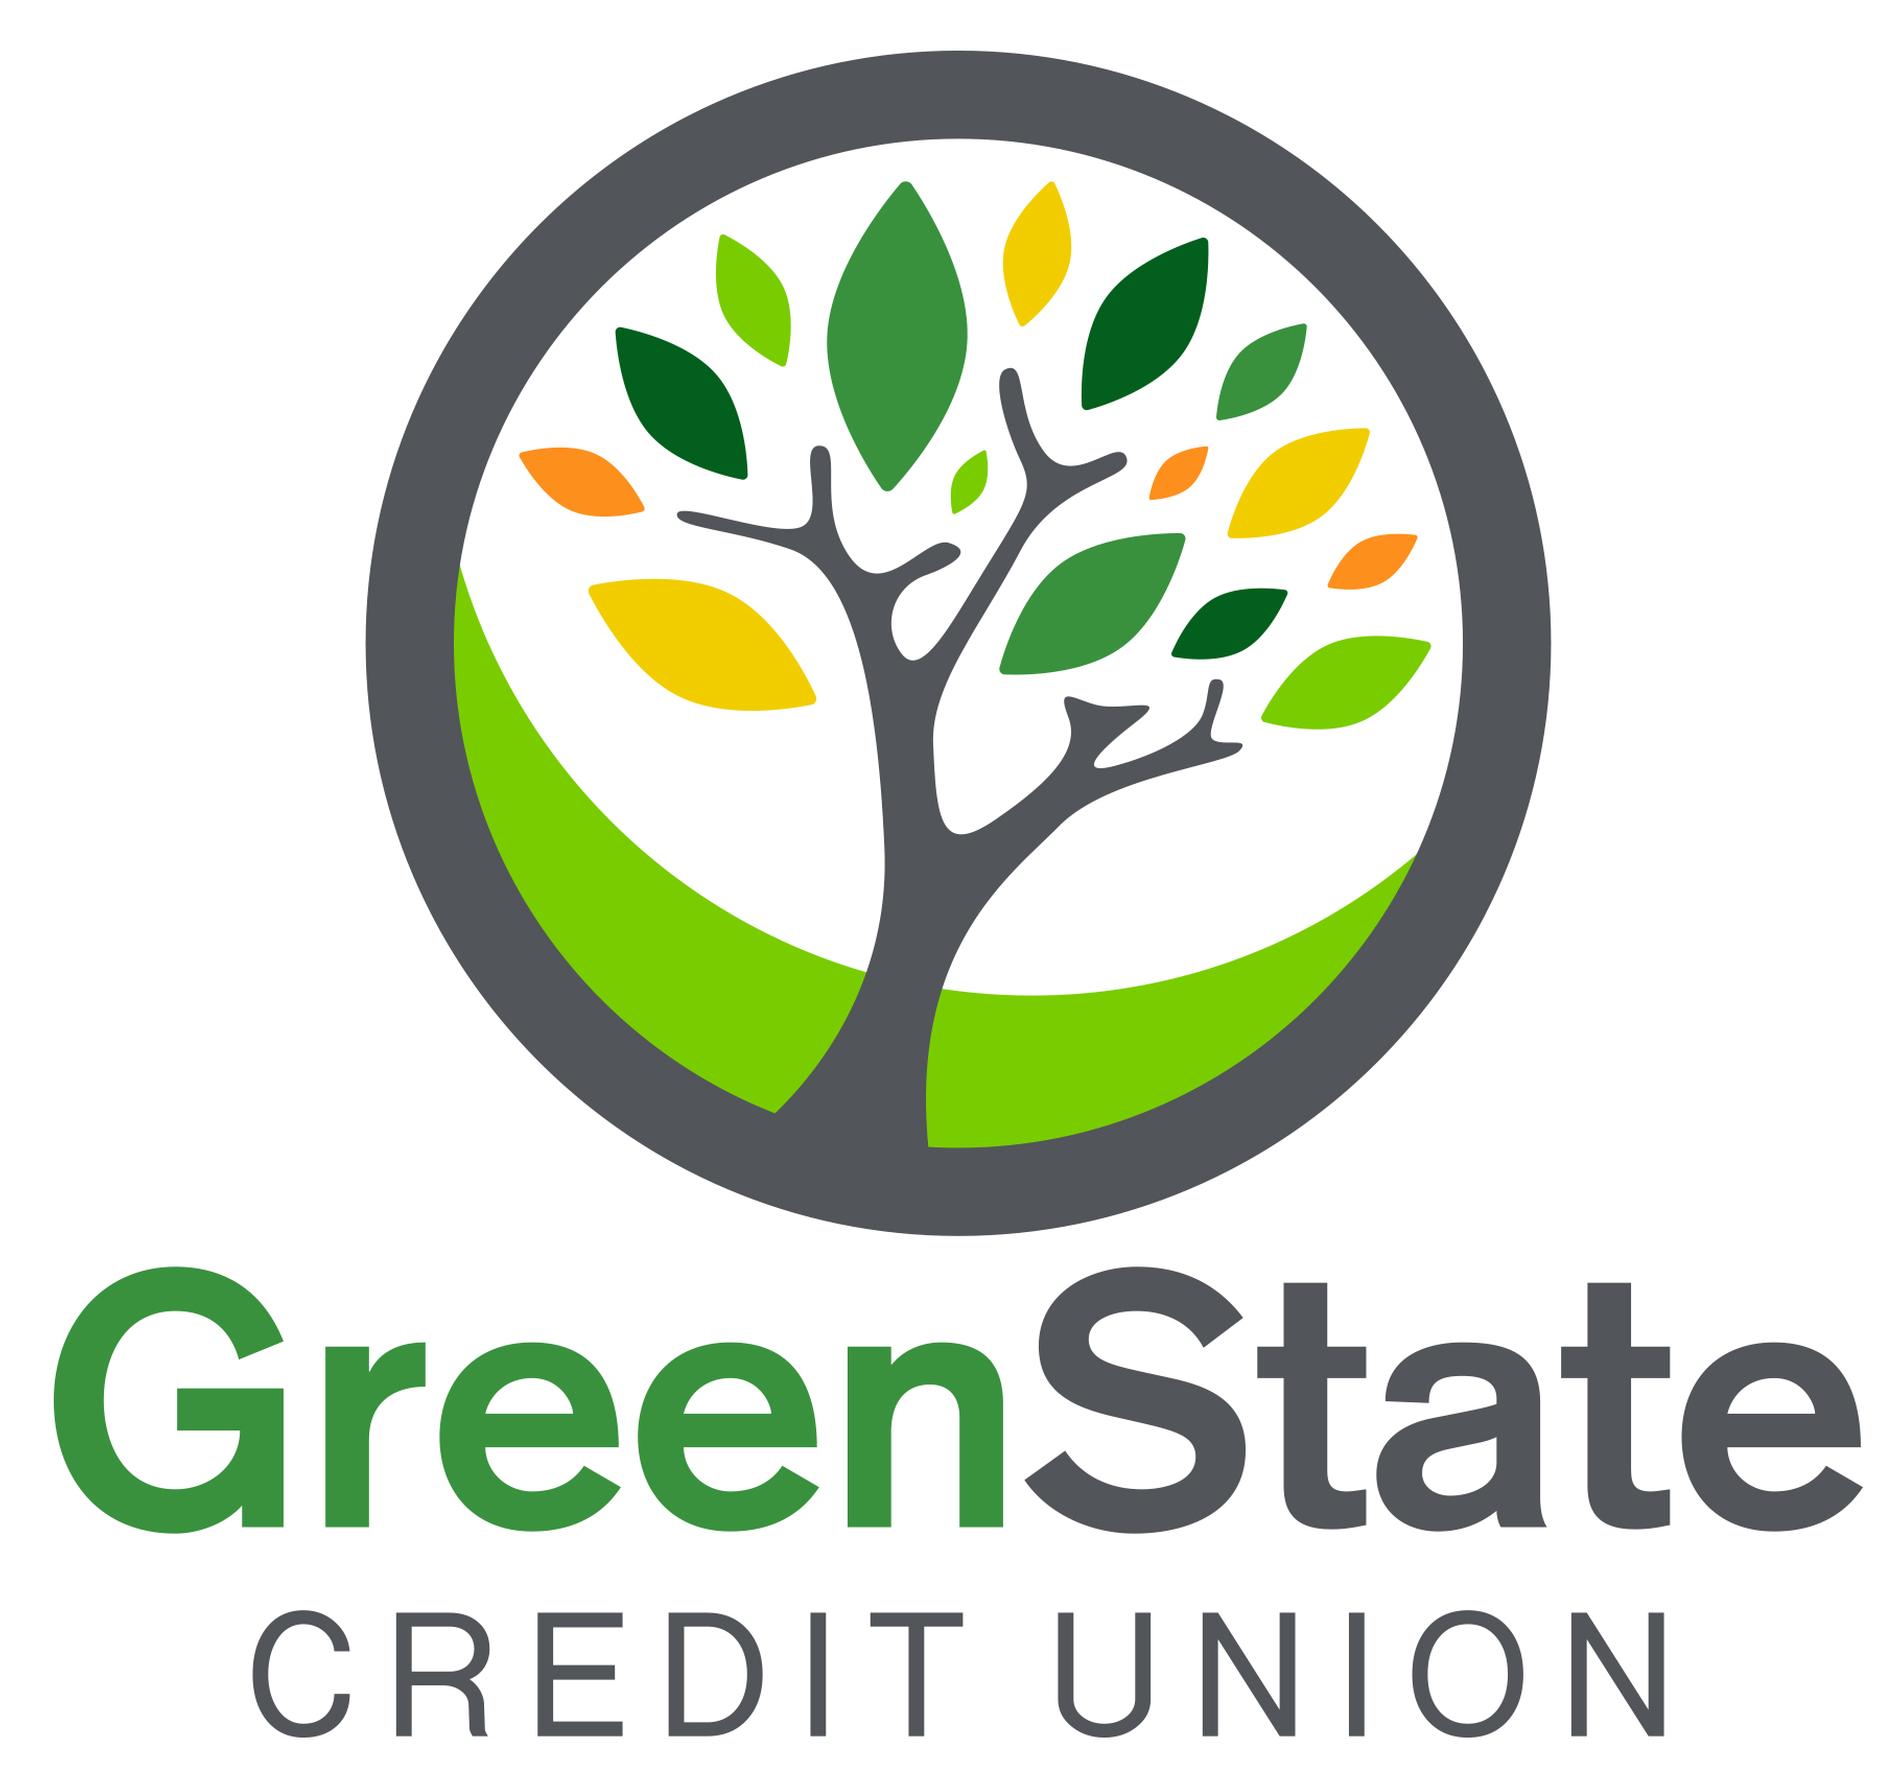 GreenState Credit Union